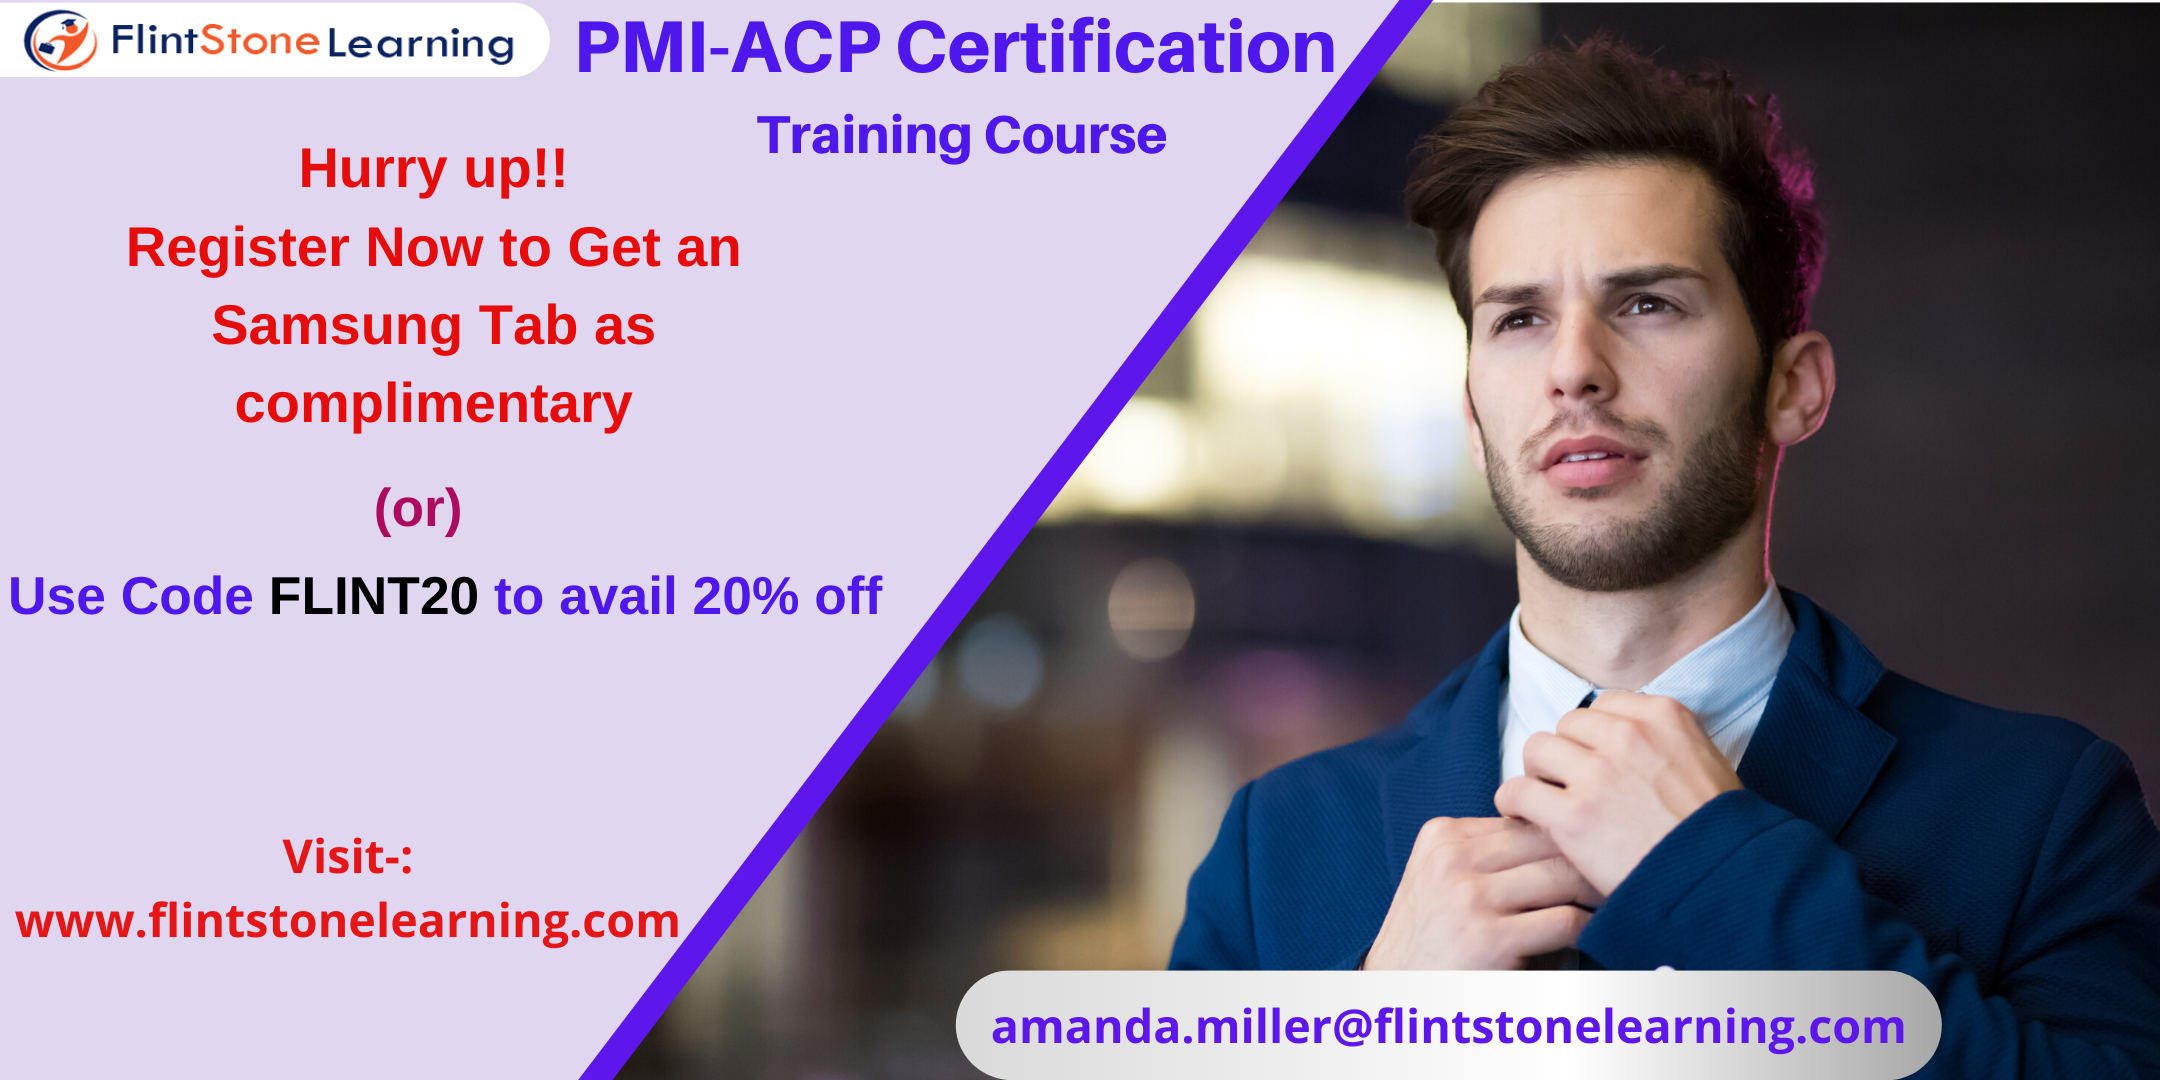 PMI-ACP Certification Training Course in Bellevue, WA